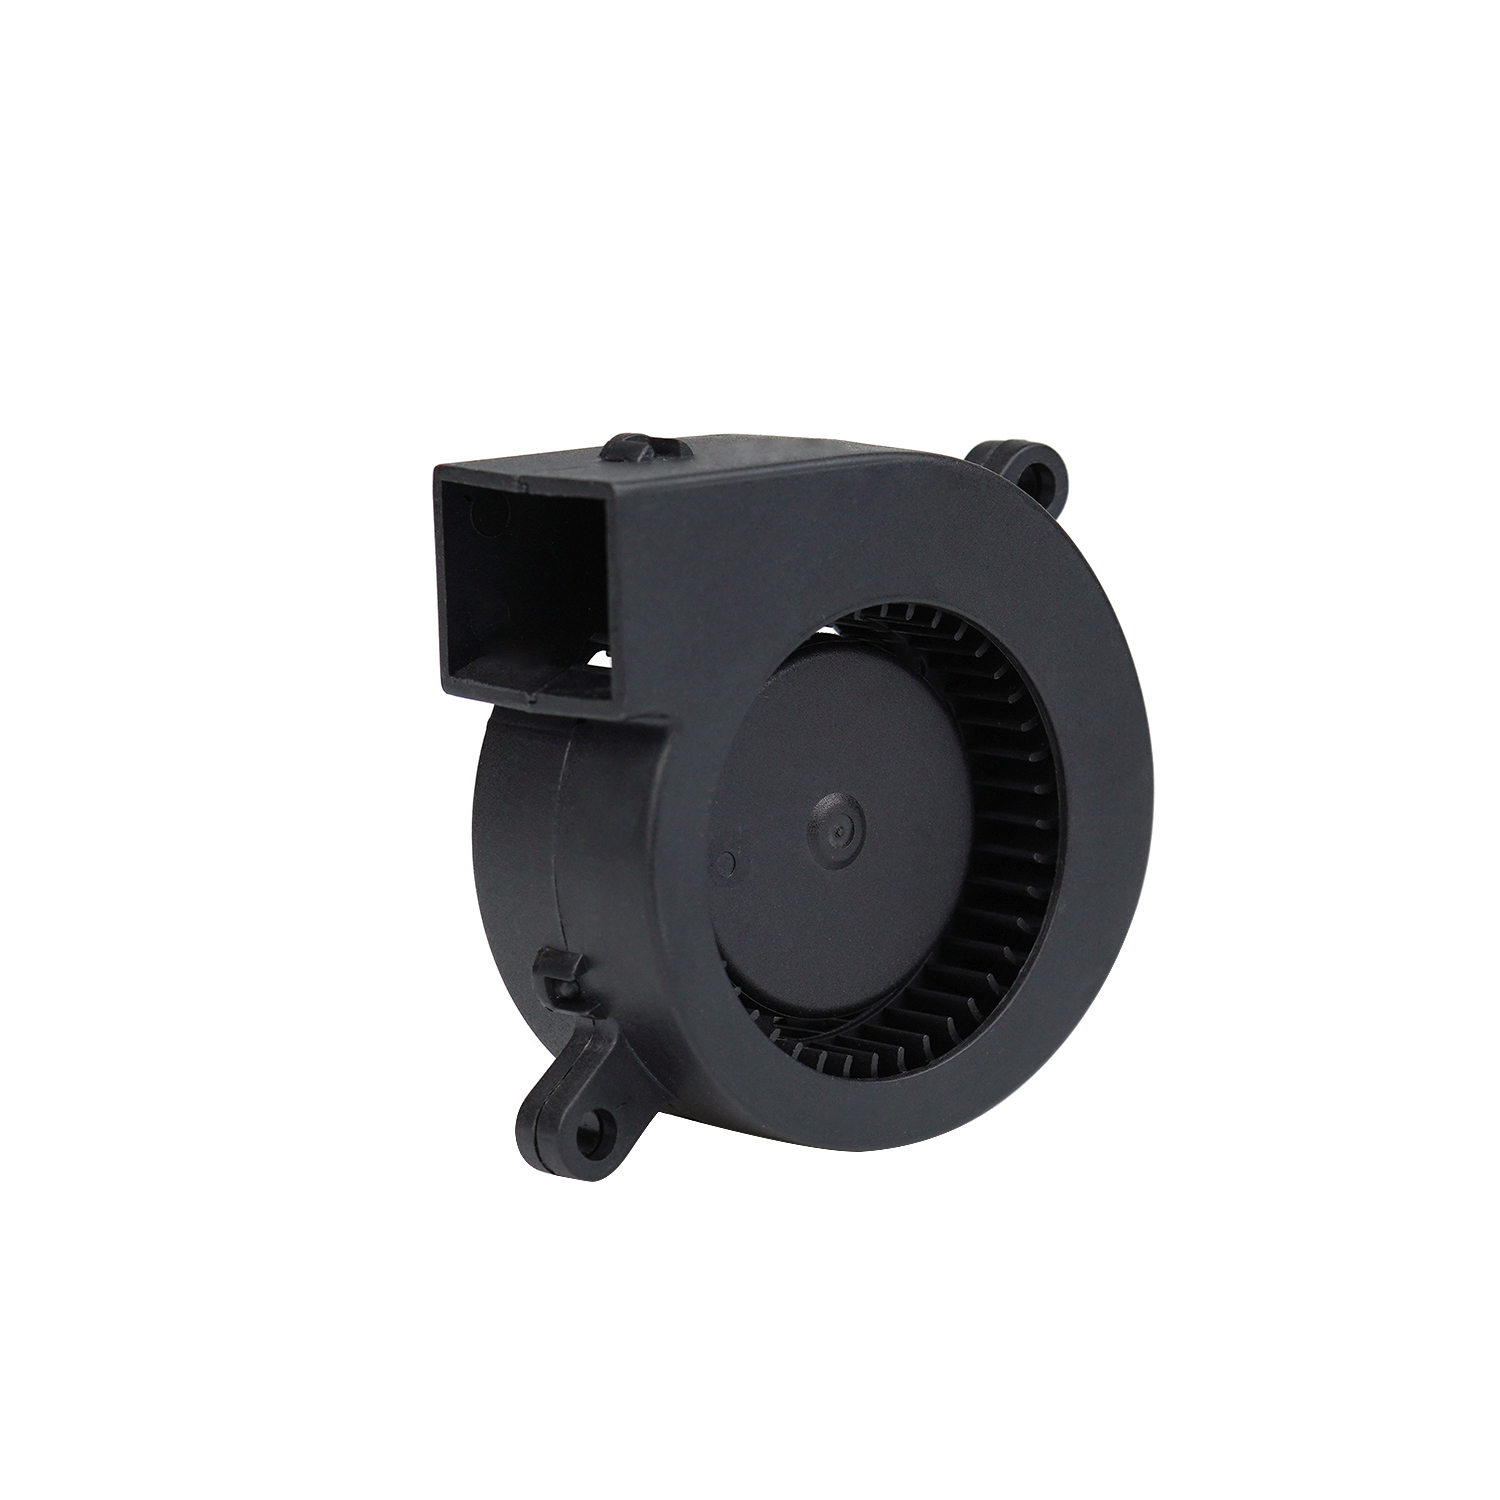 6025 5v 12v 24v 60mm ventilateur dc blower fan